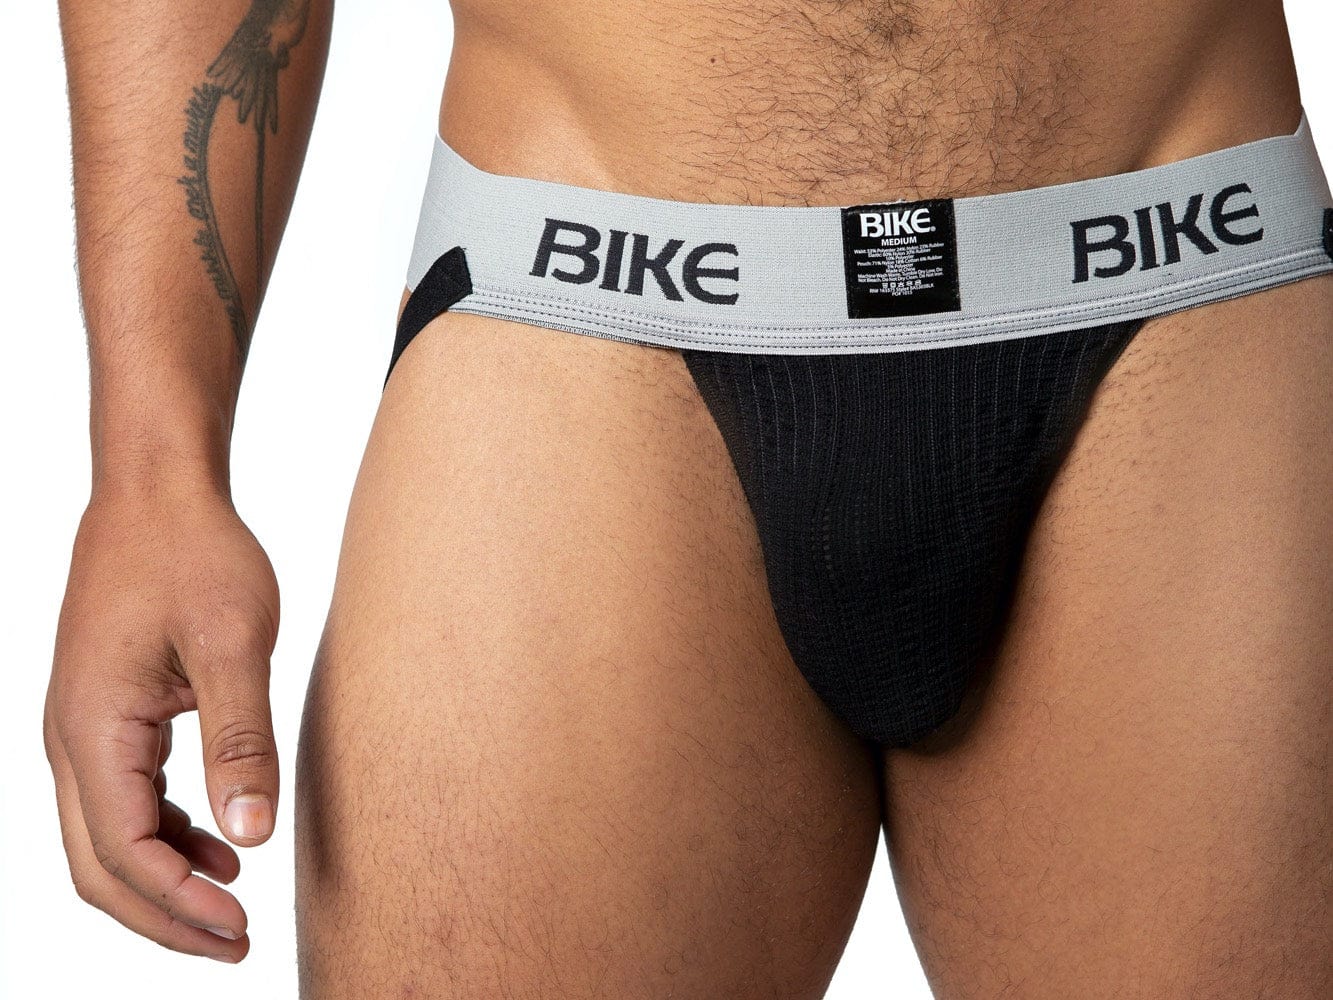 Boys Bike Jock strap Underwear Athletic Supporter 26 / 28 Medium New